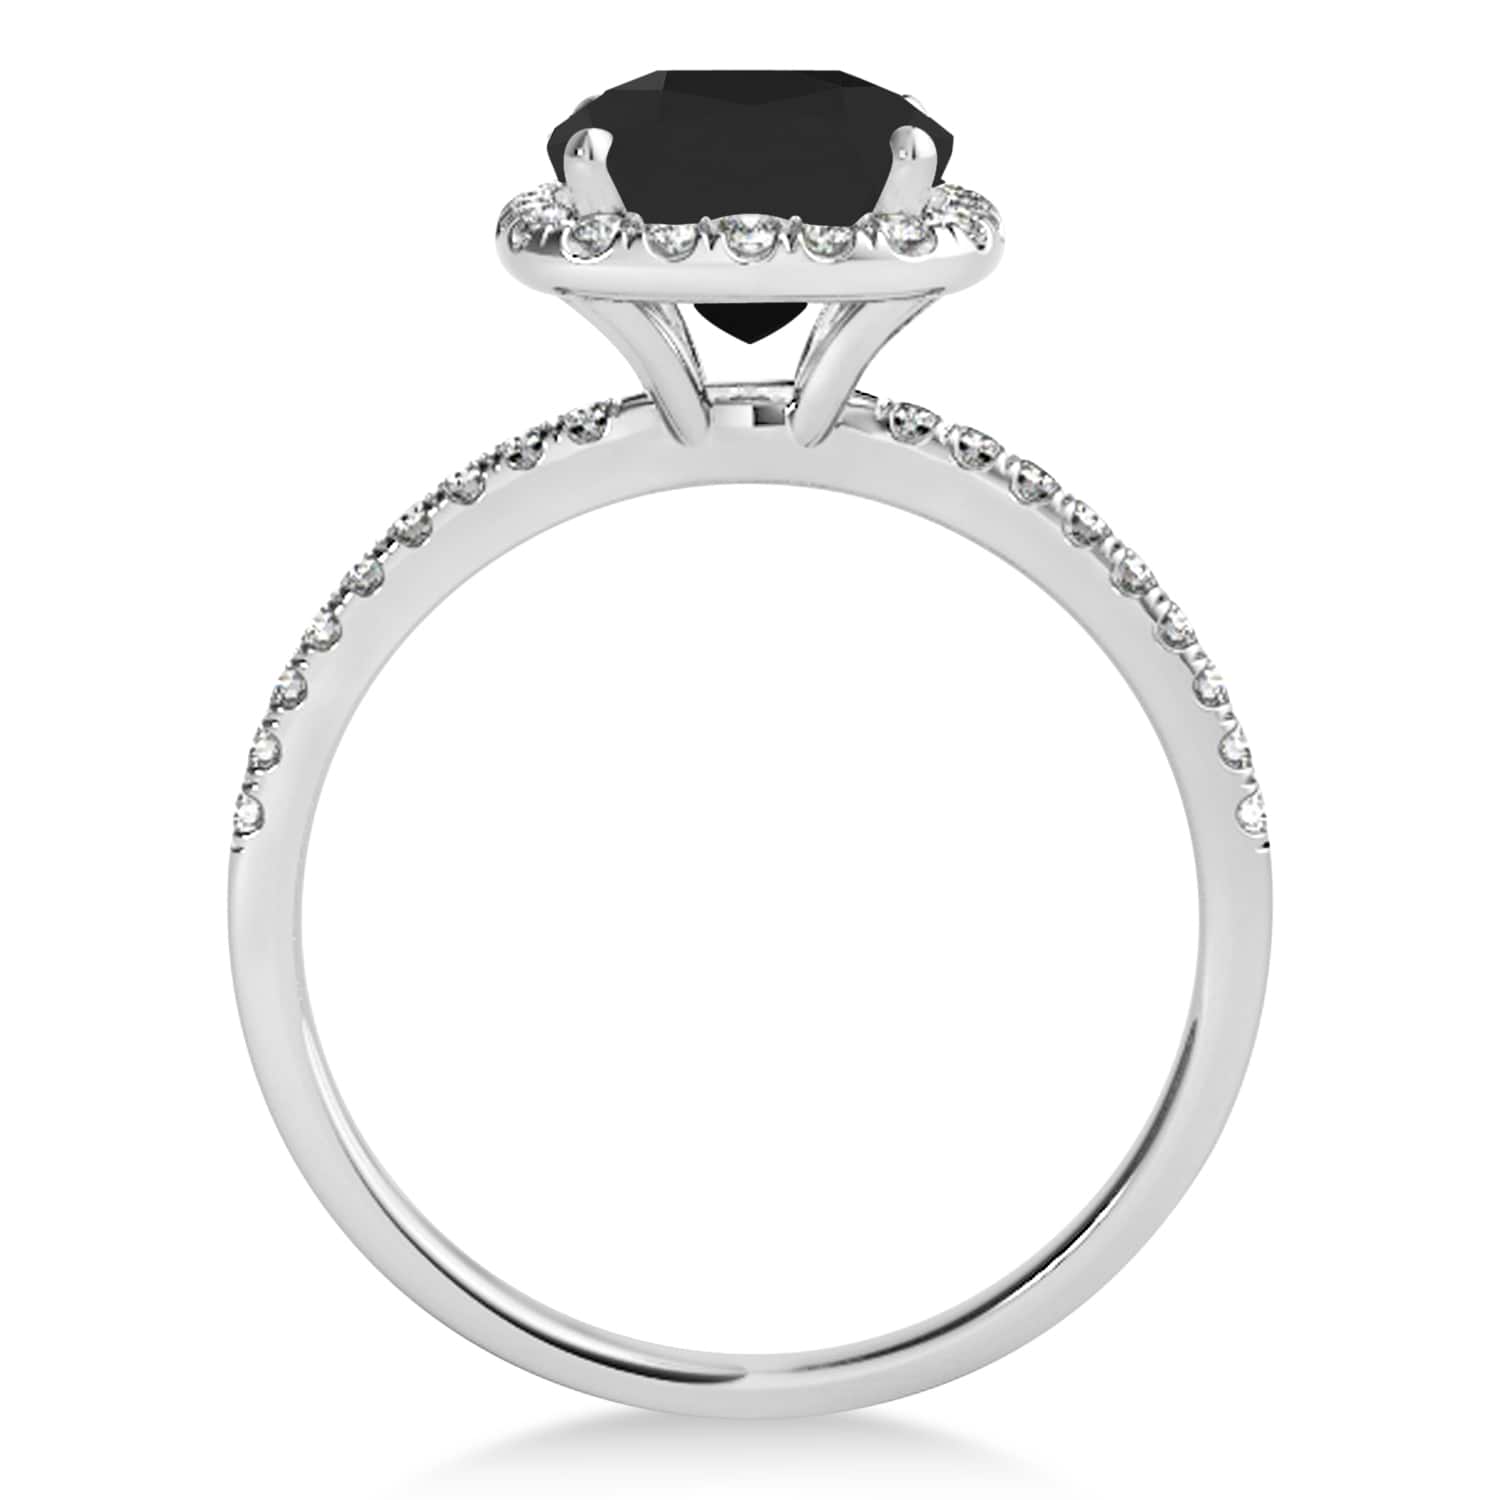 Cushion Black Diamond & Diamond Halo Engagement Ring French Pave 14k W. Gold 1.58ct